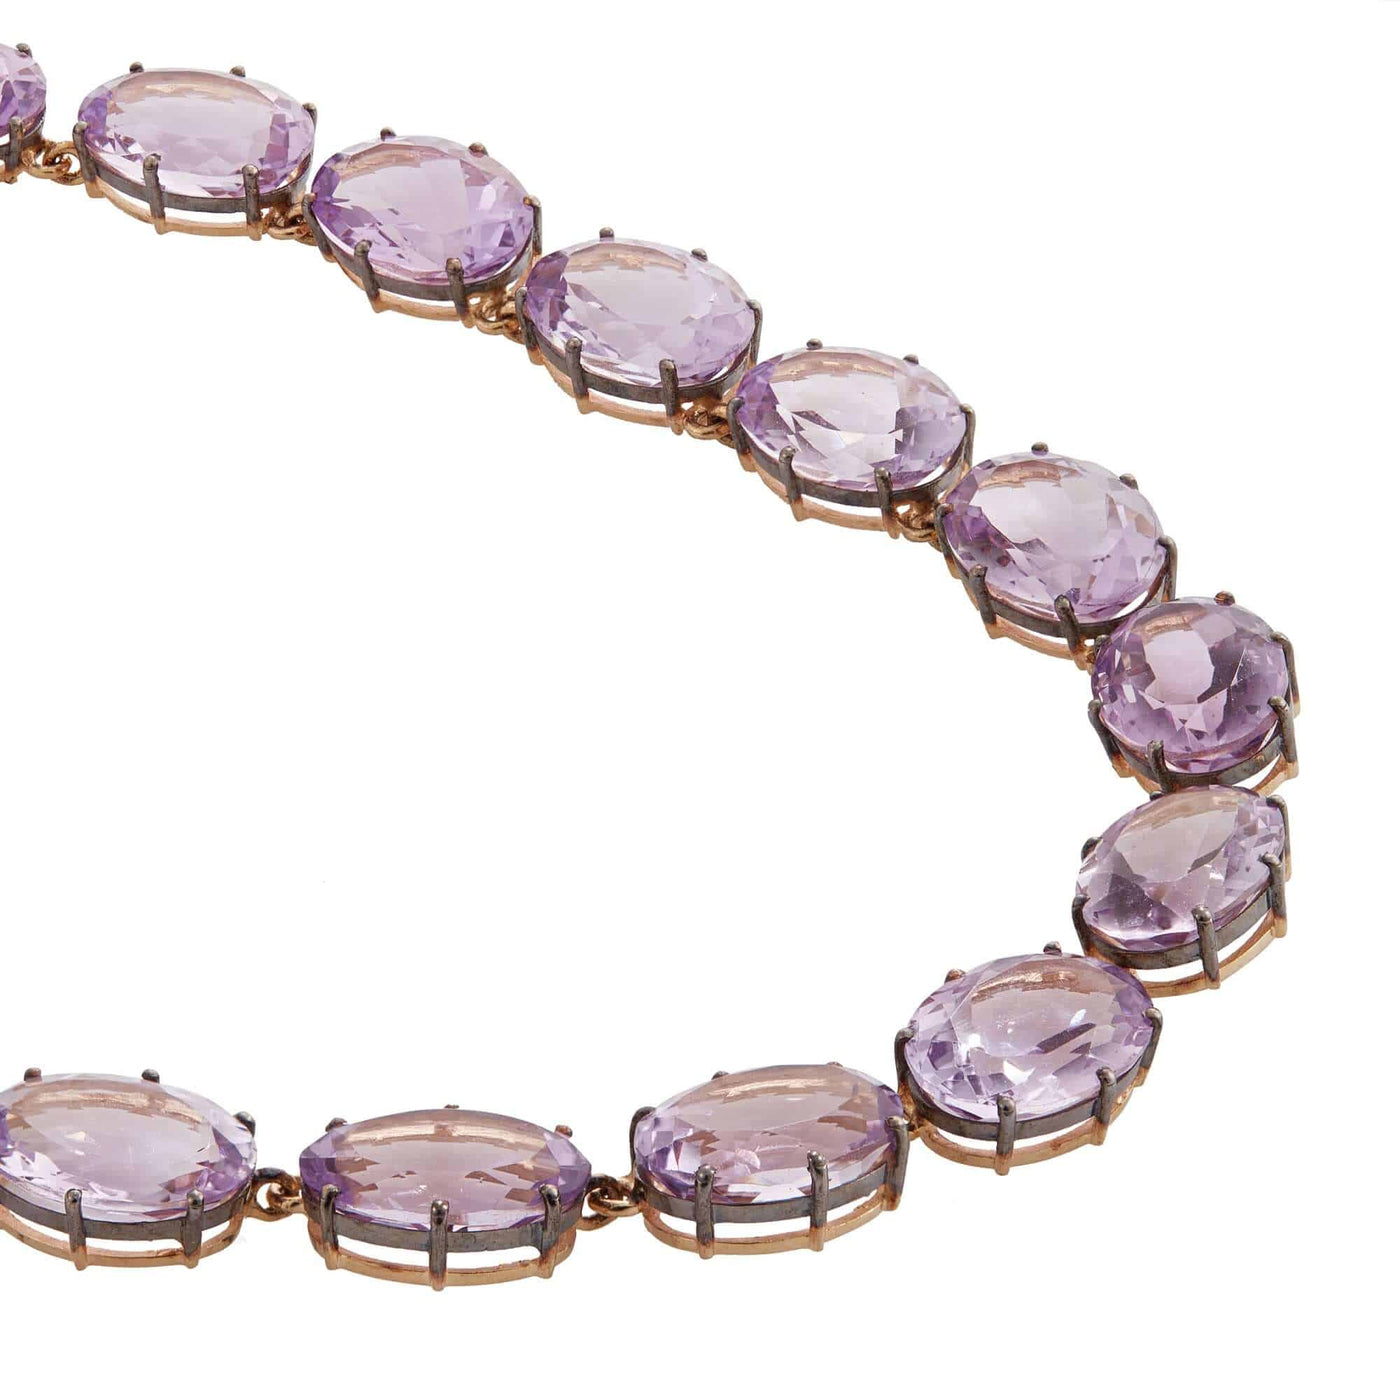 Crown Necklace Pink Amethyst Necklace - Crown - Ileana Makri store